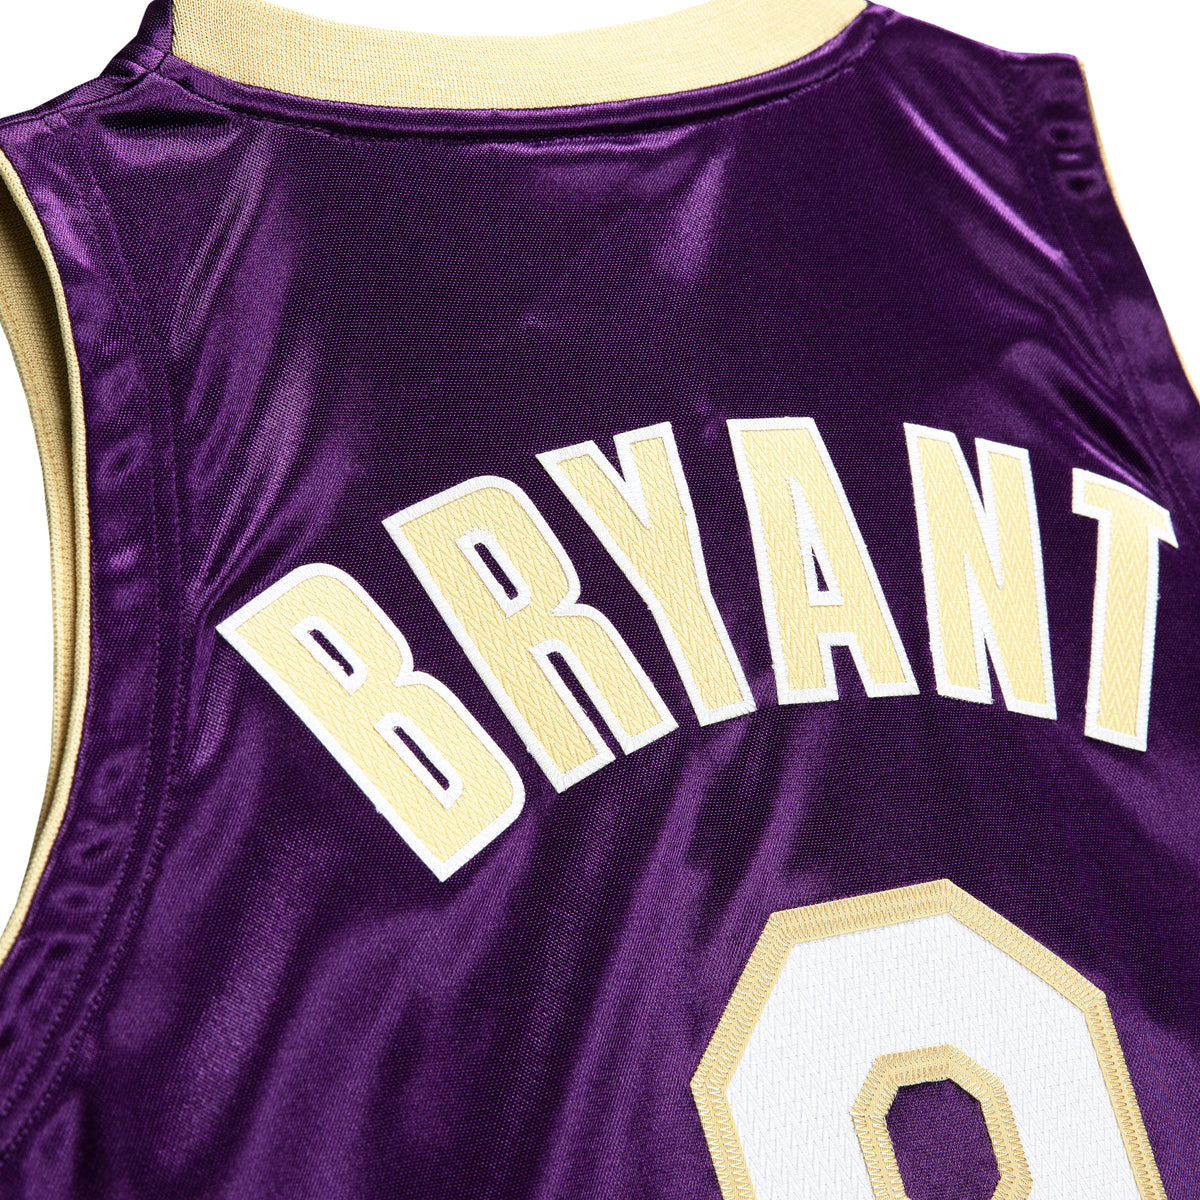 Kobe Bryant #8 - Los Angeles Lakers *City Edition 2022-23* - JerseyAve -  마켓플레이스